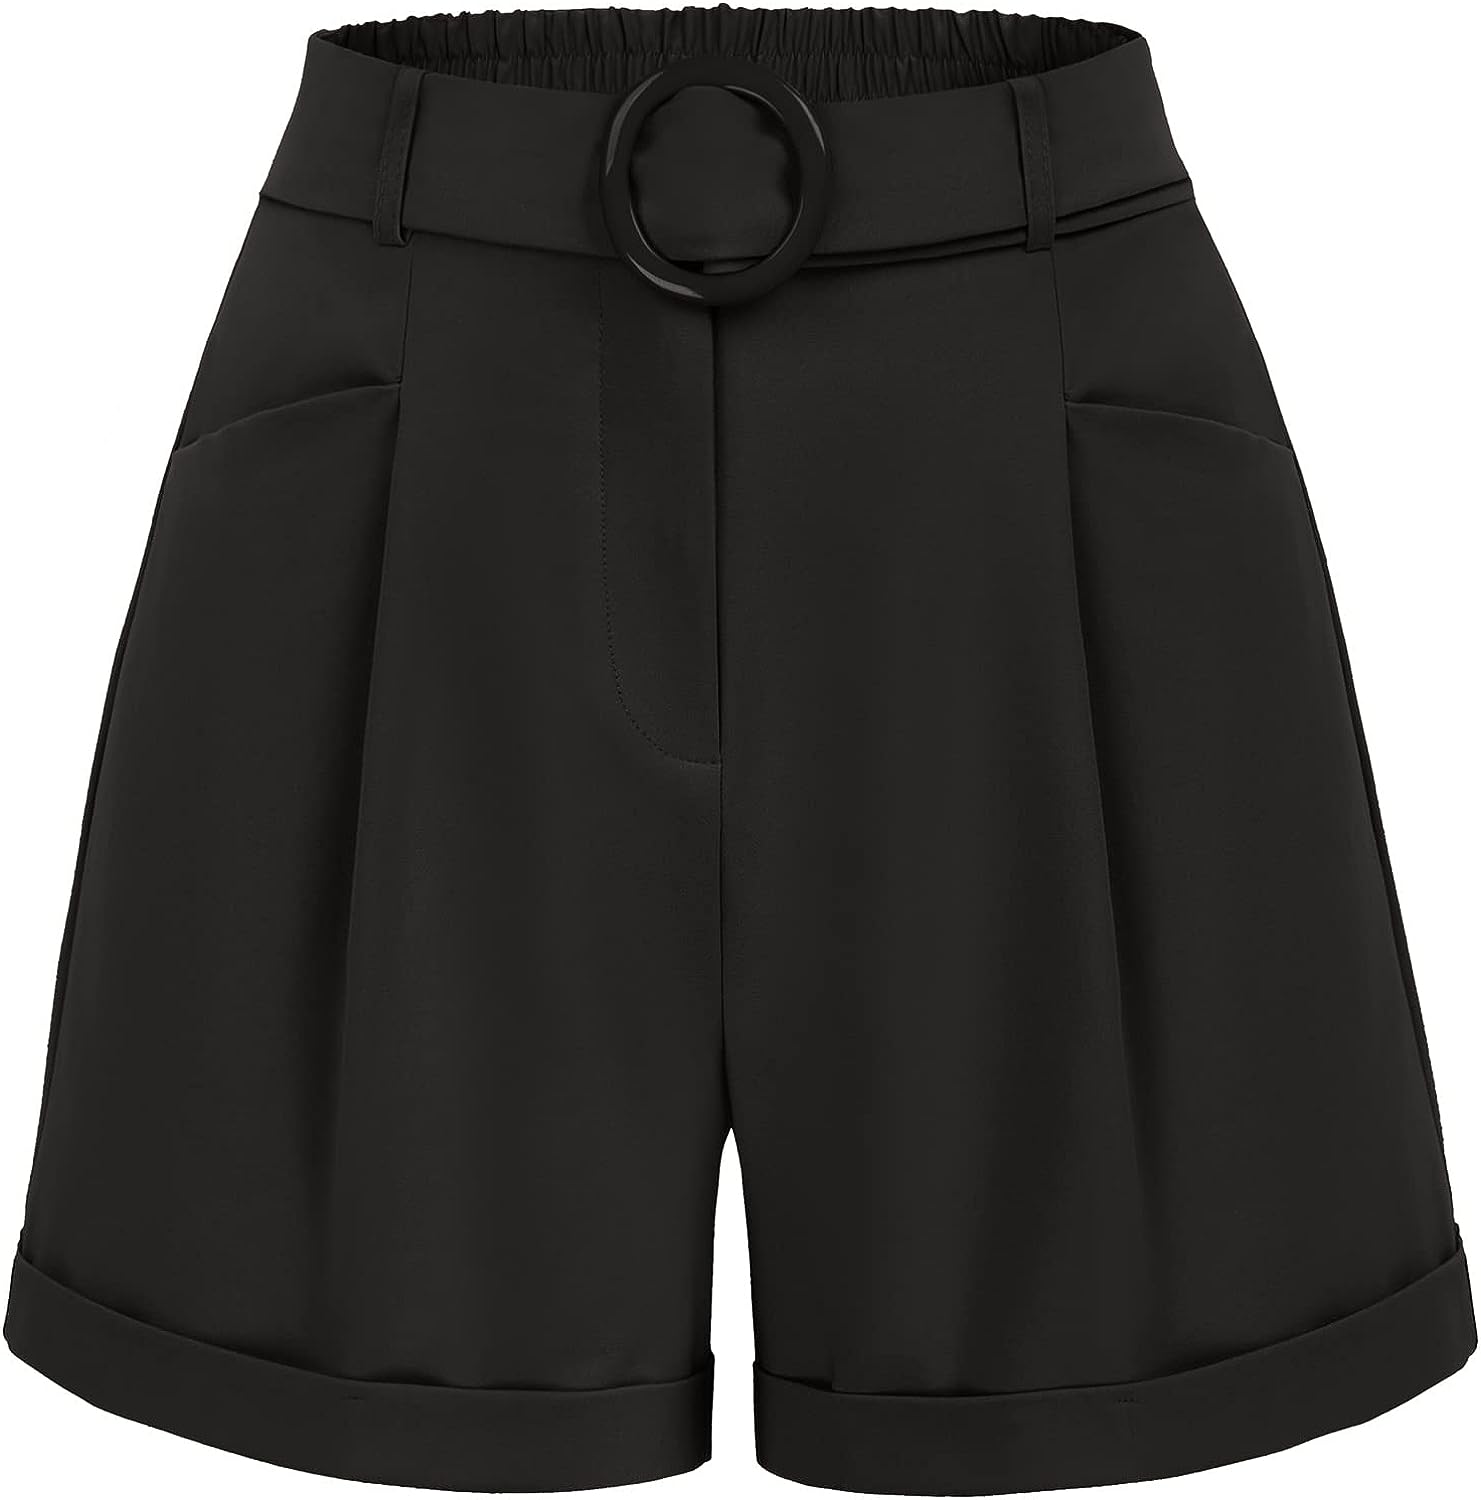 Kate Kasin Women Wide Leg Shorts 2023 Casual Elastic Bermuda Shorts Dressy Shorts for Women High Waisted with Pockets & Belt